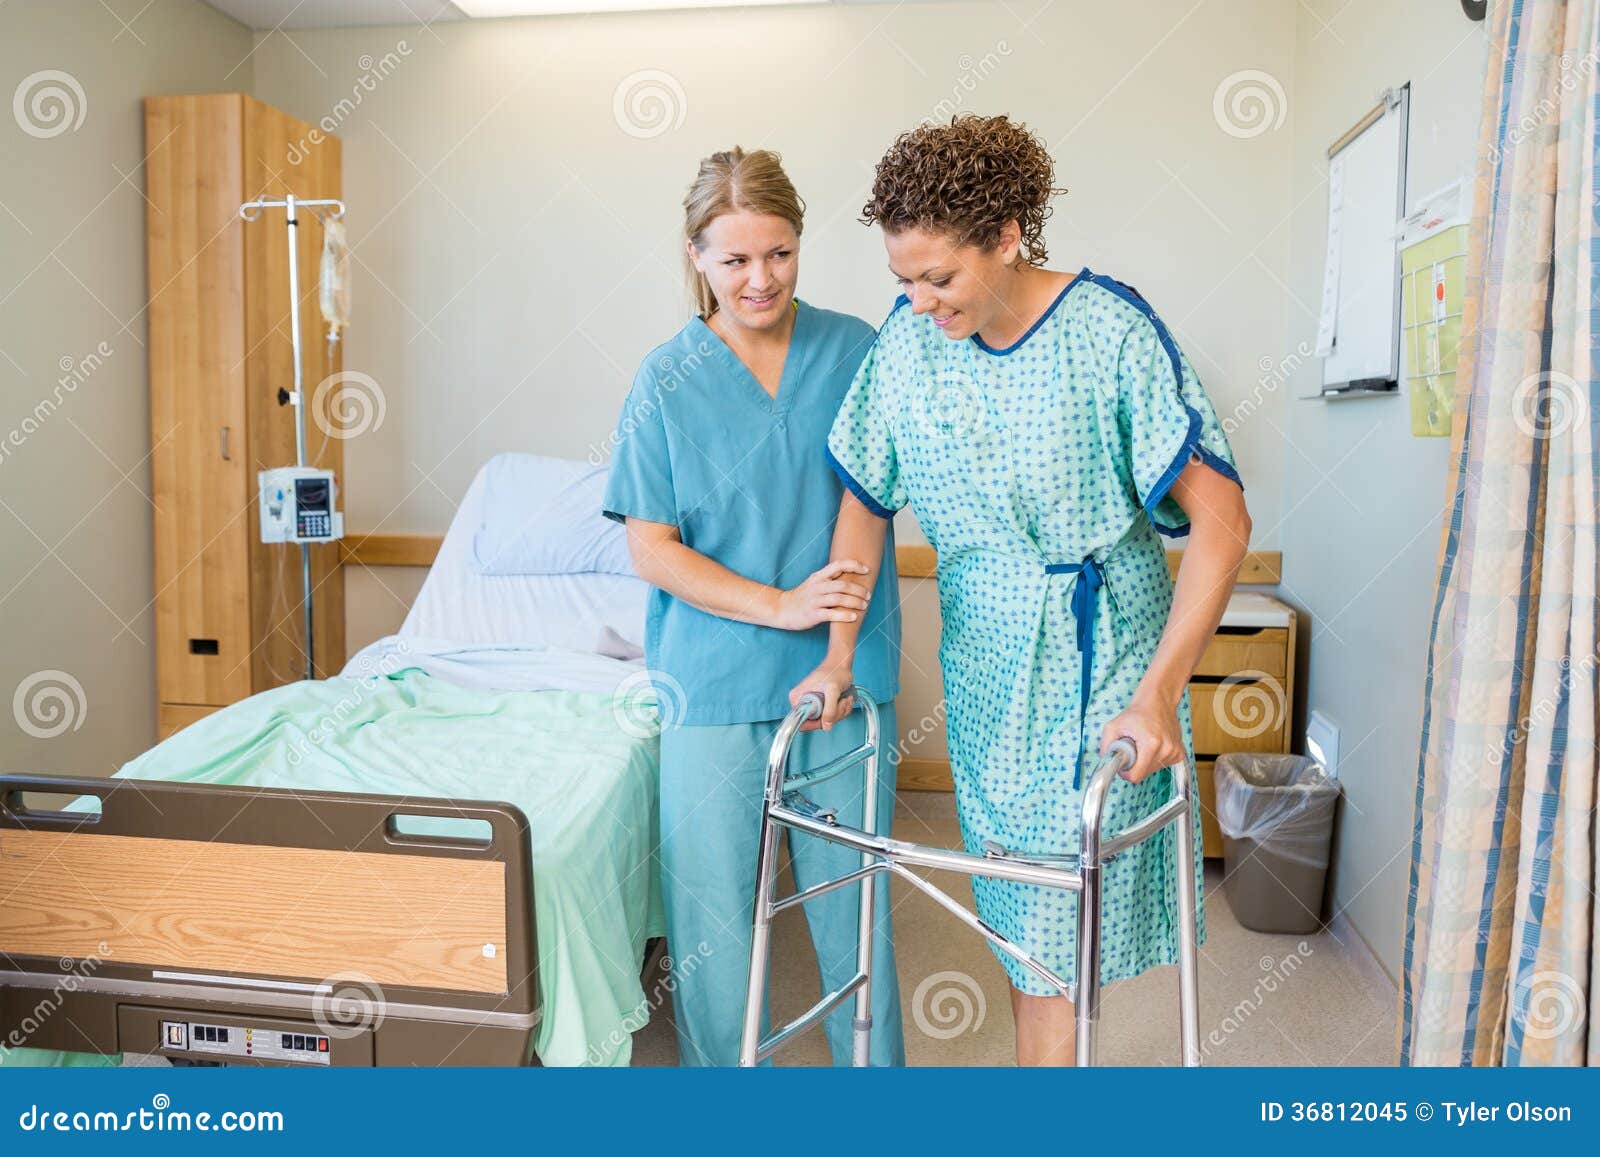 Mid adult female nurse helping patient to walk using walker in hospital